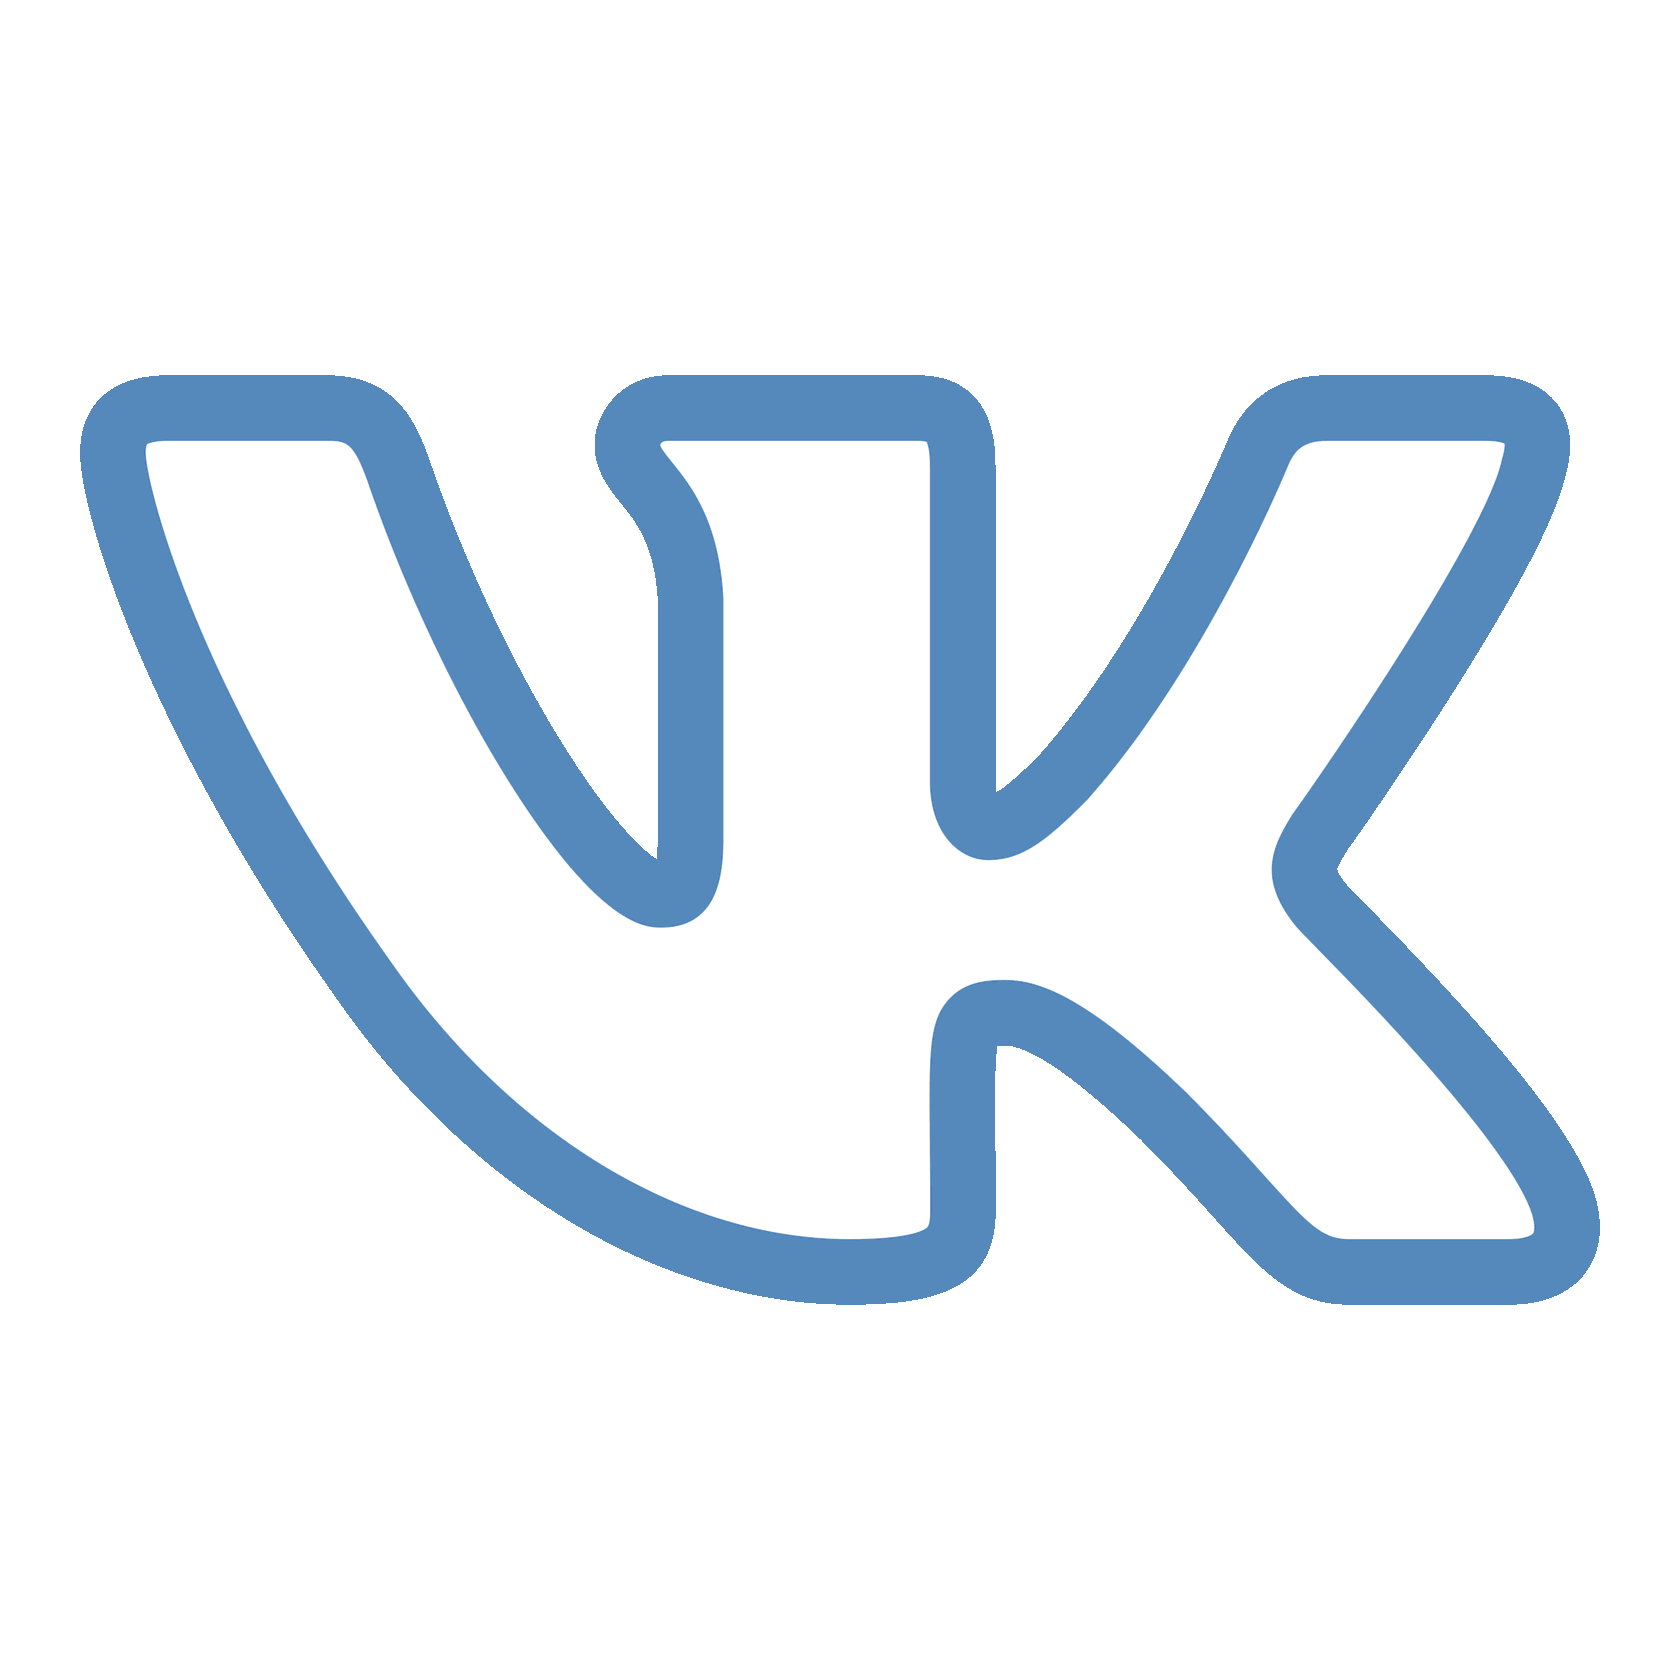 Society vk. Логотип ВК. Иконка ВК новая. Значок мл. Логотип ВК на прозрачном фоне.